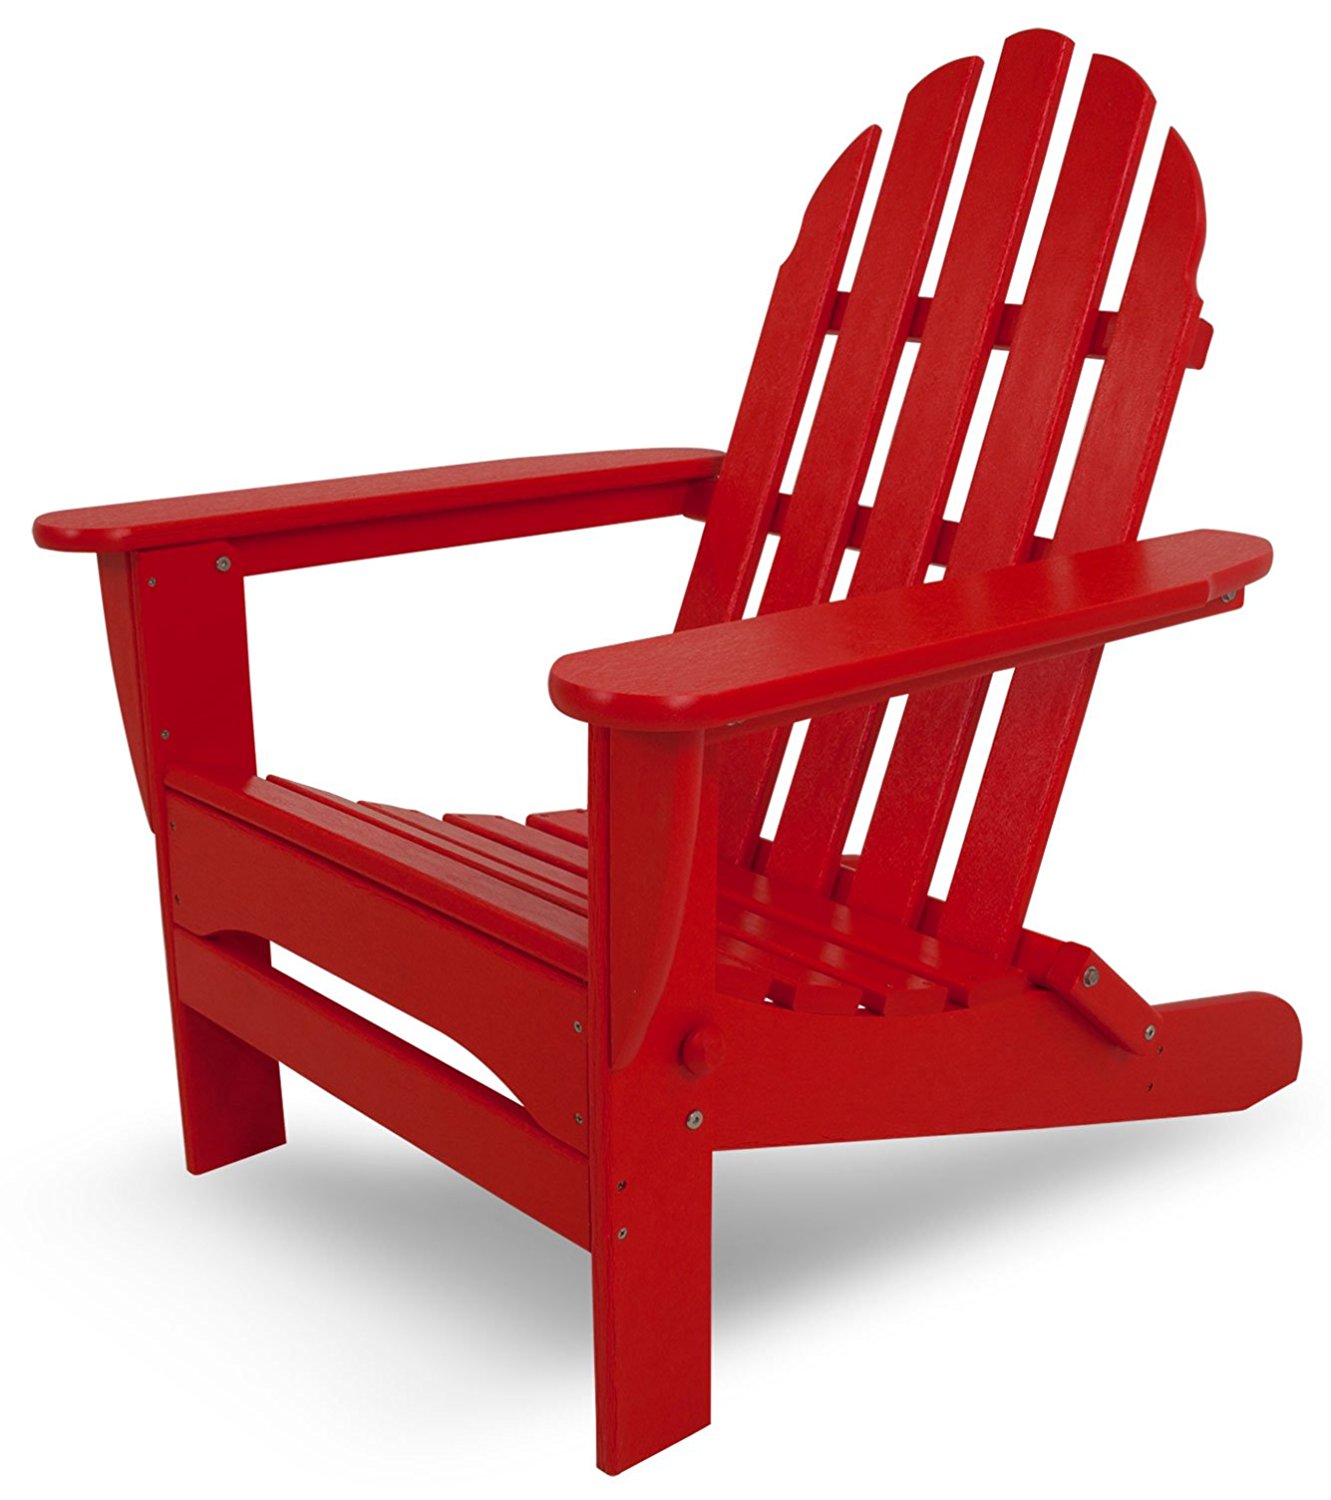 Kick Back In A Beautiful Poly Resin Adirondack Chair Outsidemodern